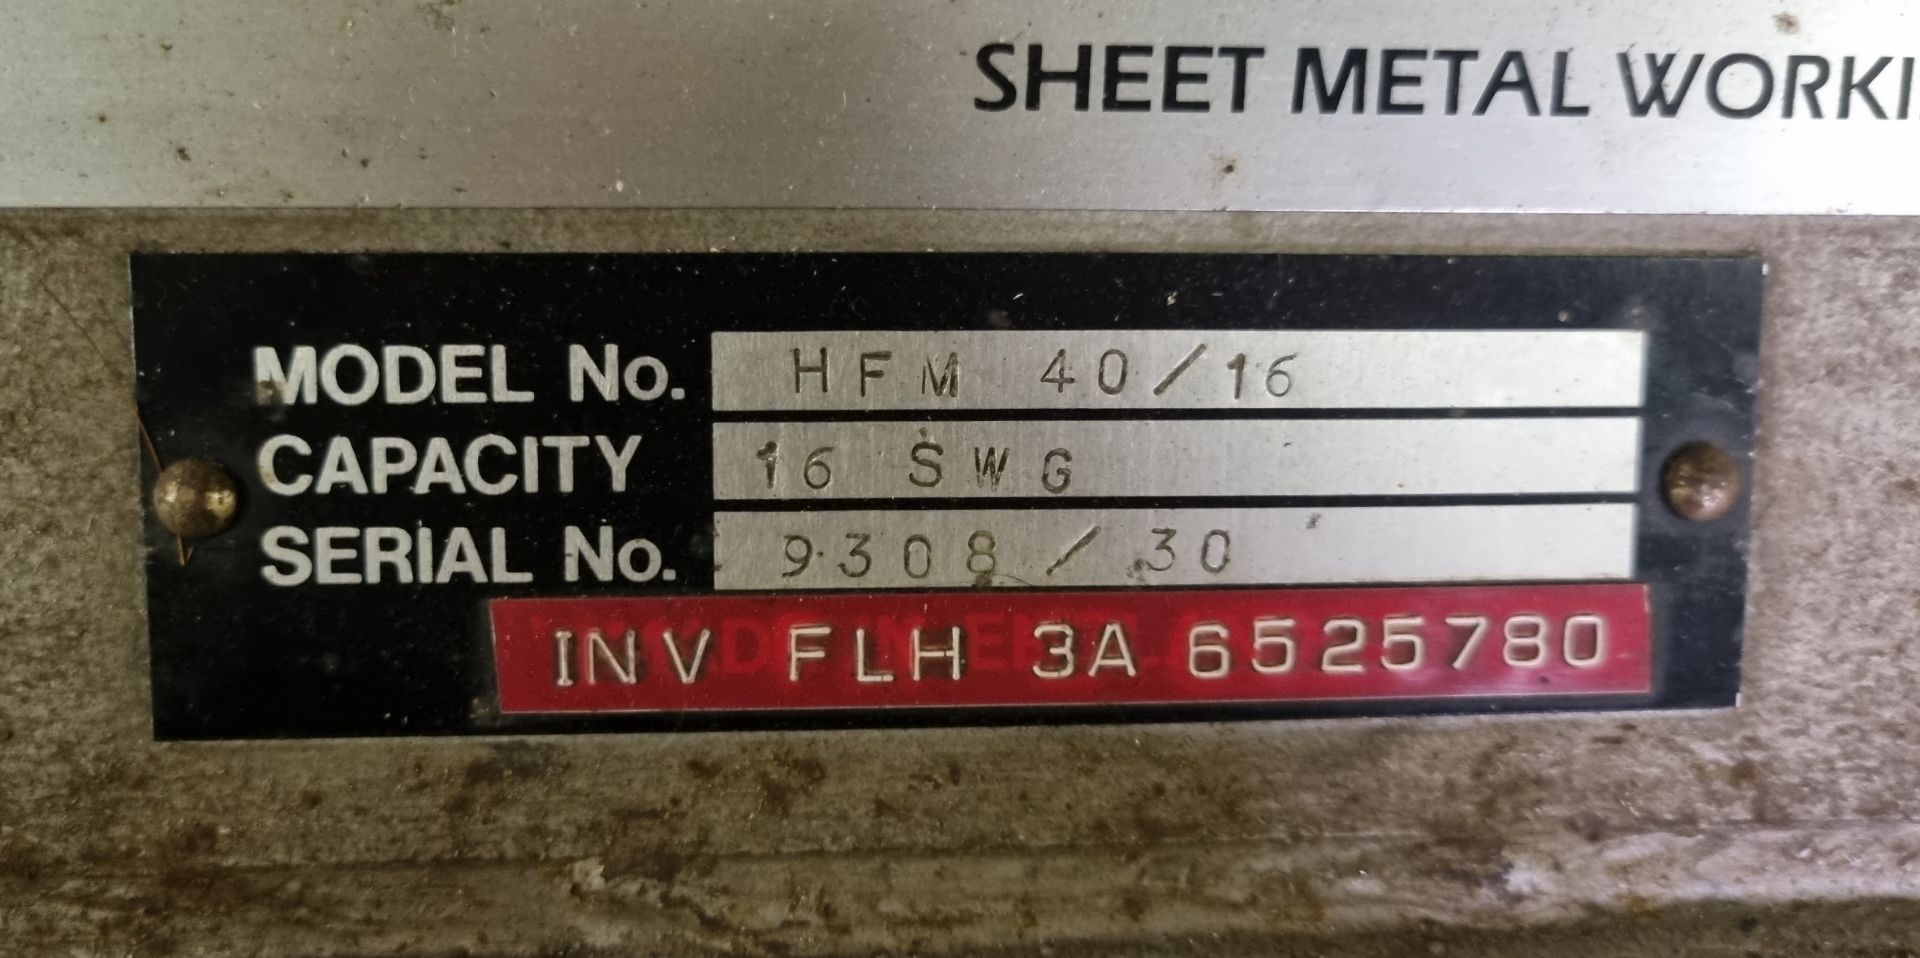 Waltons HFM 40/16 sheet metal folding machine - Serial No: 9308 / 30 - capacity: 16 SWG - Image 4 of 7